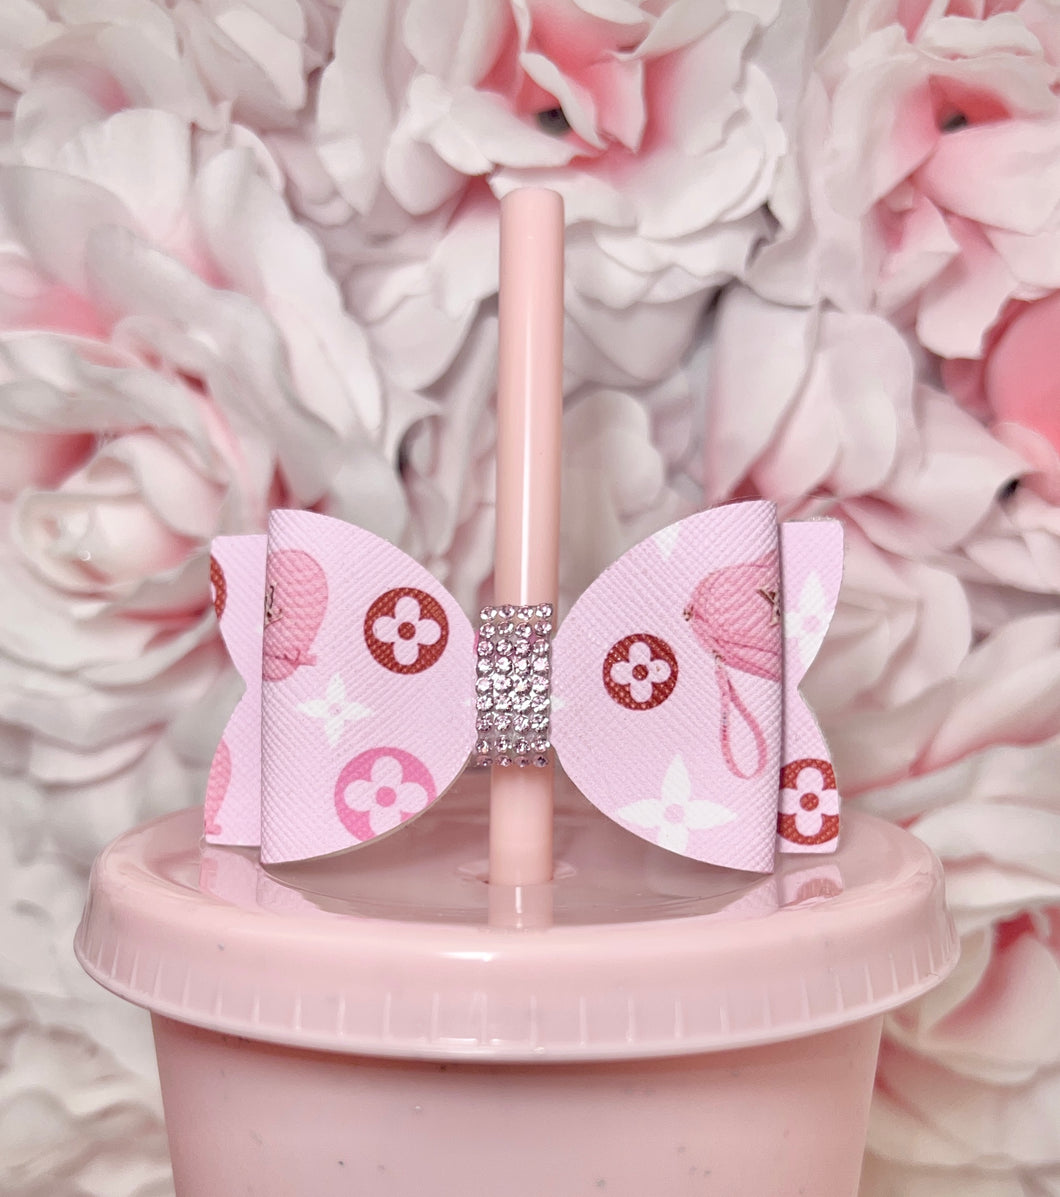 Blush bow straw topper – Miss Crafty Ness